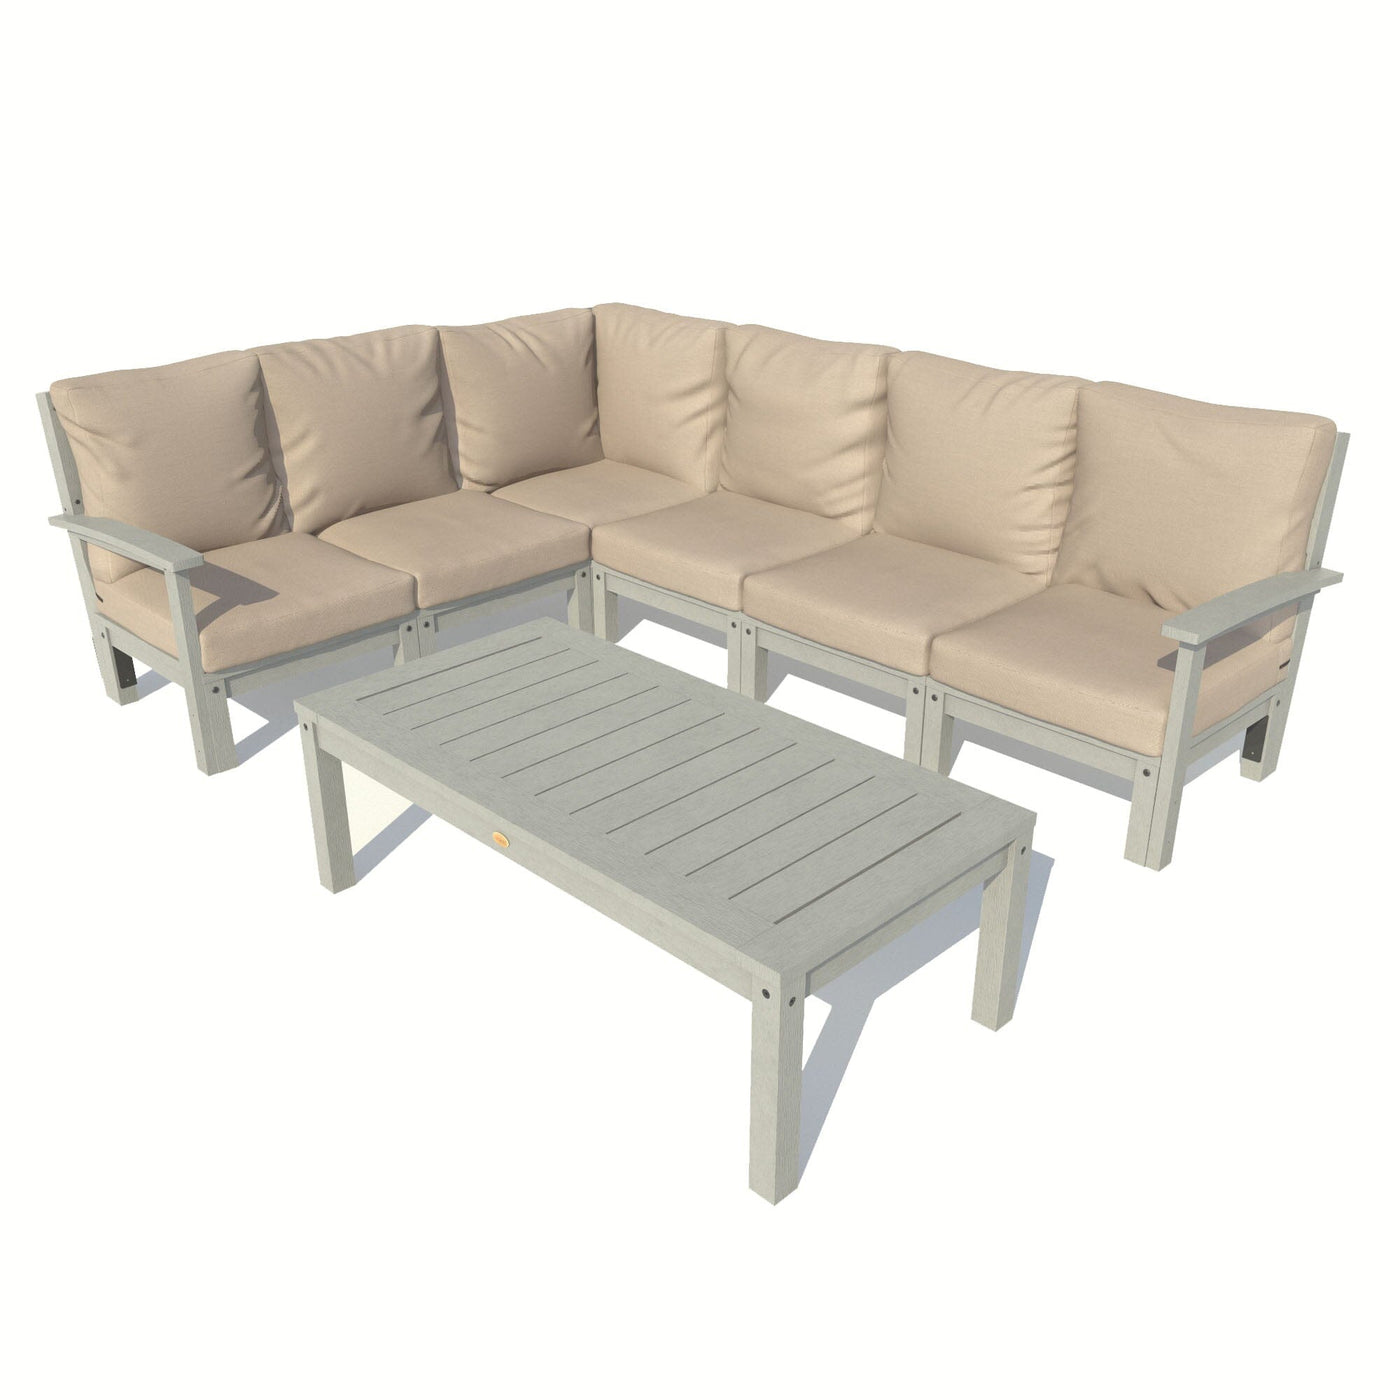 Bespoke Deep Seating: 7 Piece Sectional Sofa Set with Conversation Table Deep Seating Highwood USA Driftwood Coastal Teak 